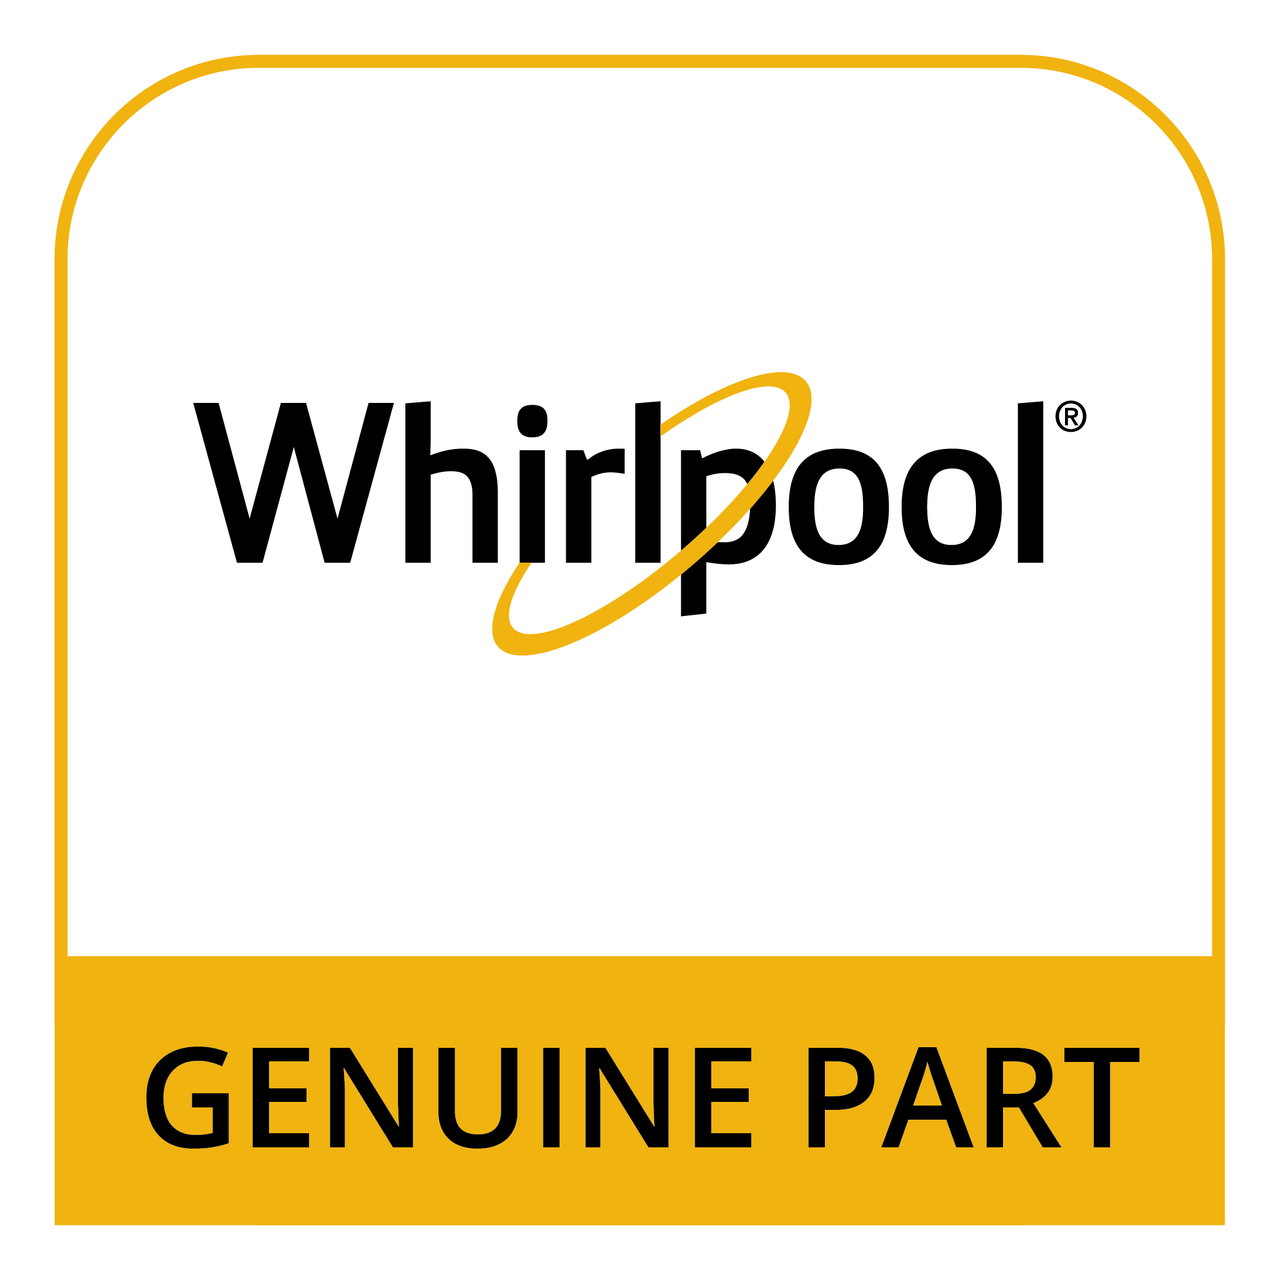 Whirlpool WFR101147 - 2B X 4.8 S *Non-Wise* - Genuine Part